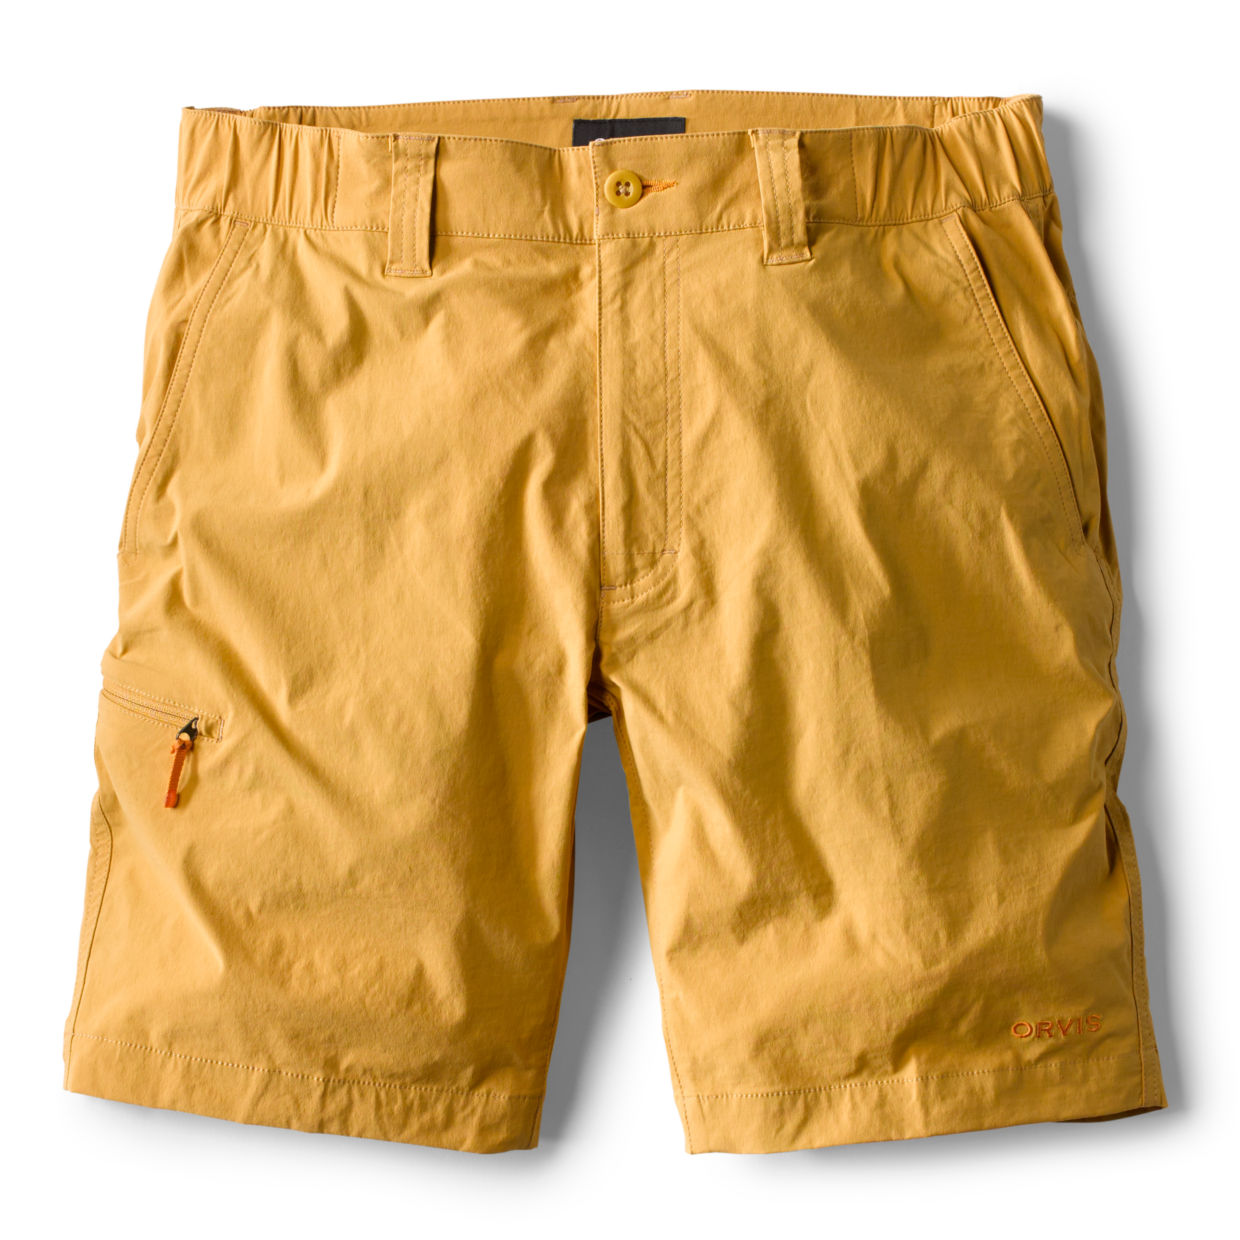 Jackson Stretch Quick-Dry Shorts